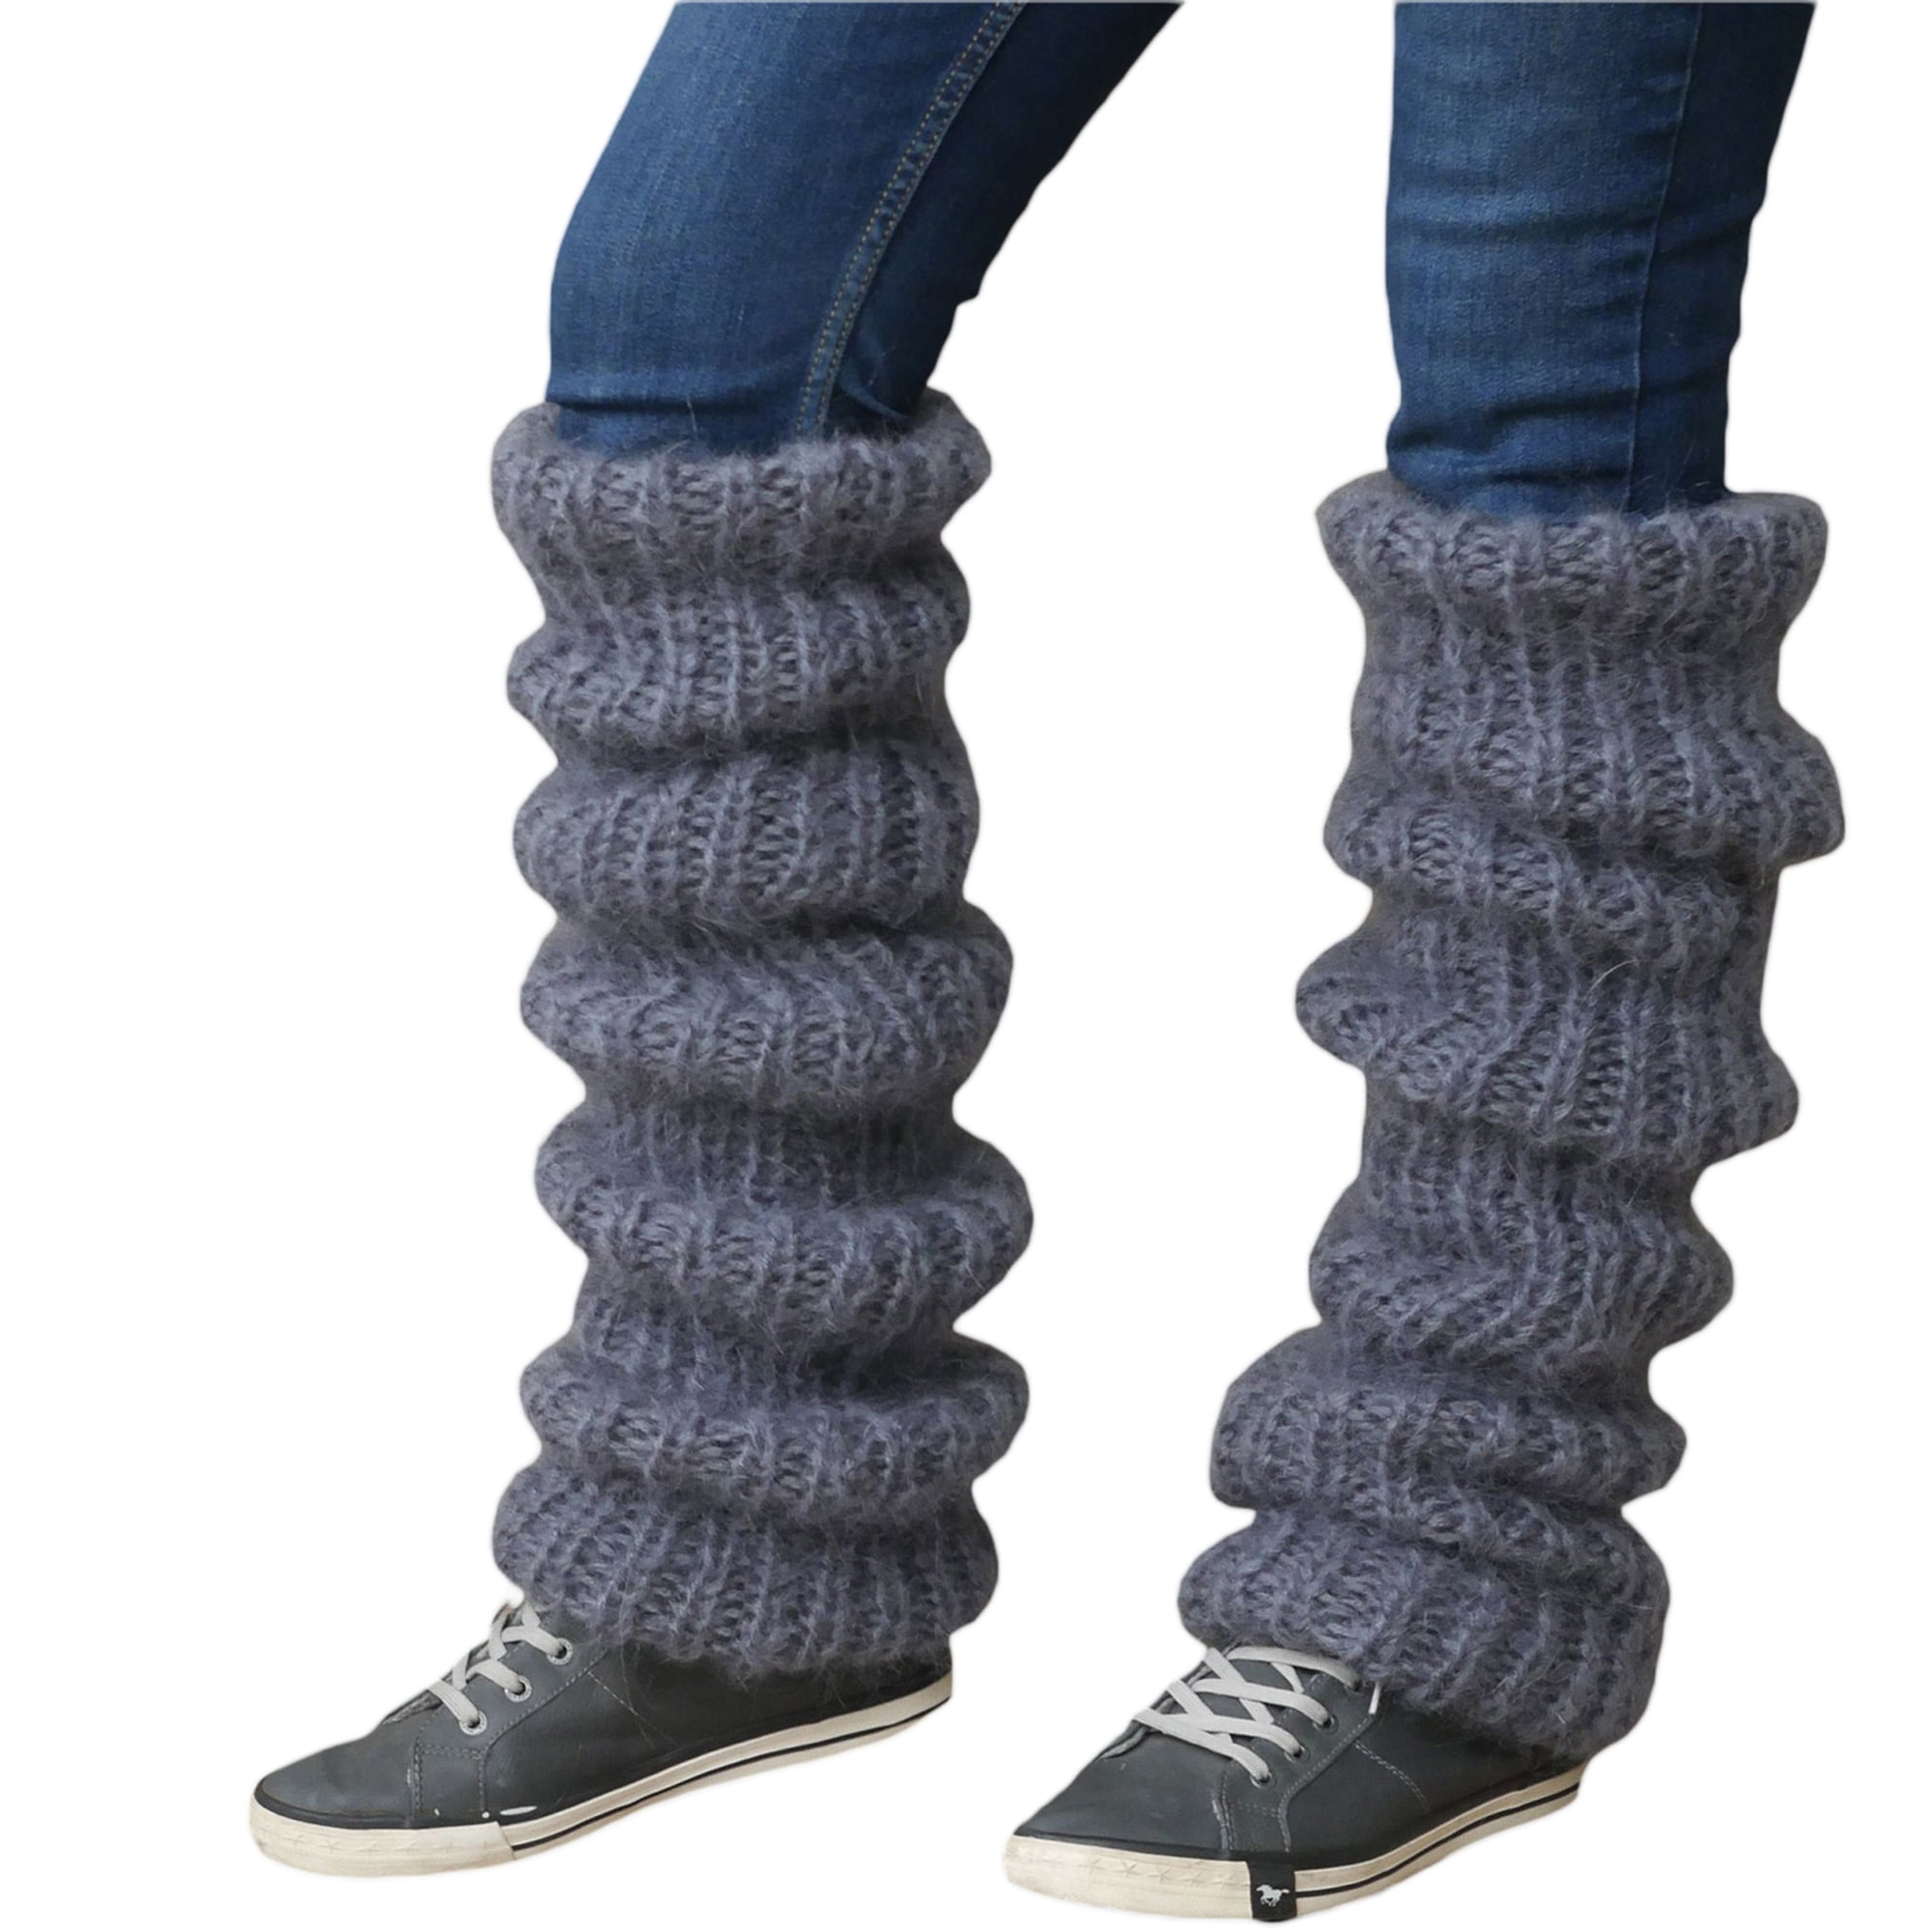 Unisex Printed Knitted Leg Warmers Women Boot Socks at Rs 90/pair in Mumbai